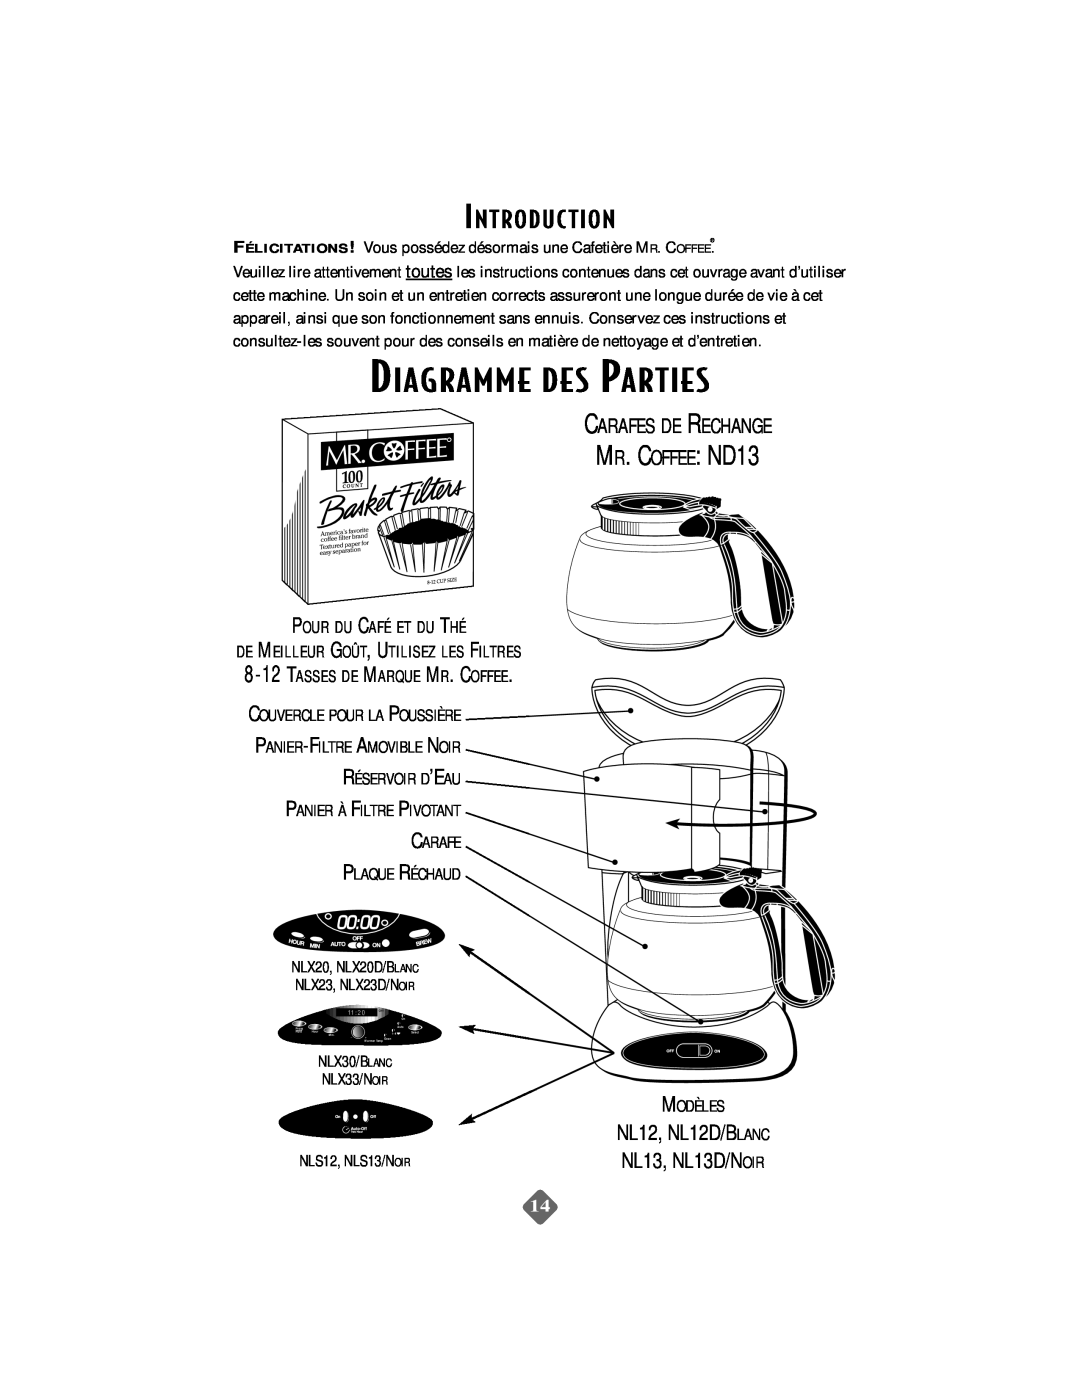 Mr. Coffee NLS12 instruction manual Diagramme Des Parties, Carafes De Rechange, MR. COFFEE ND13, Introduc Tion 